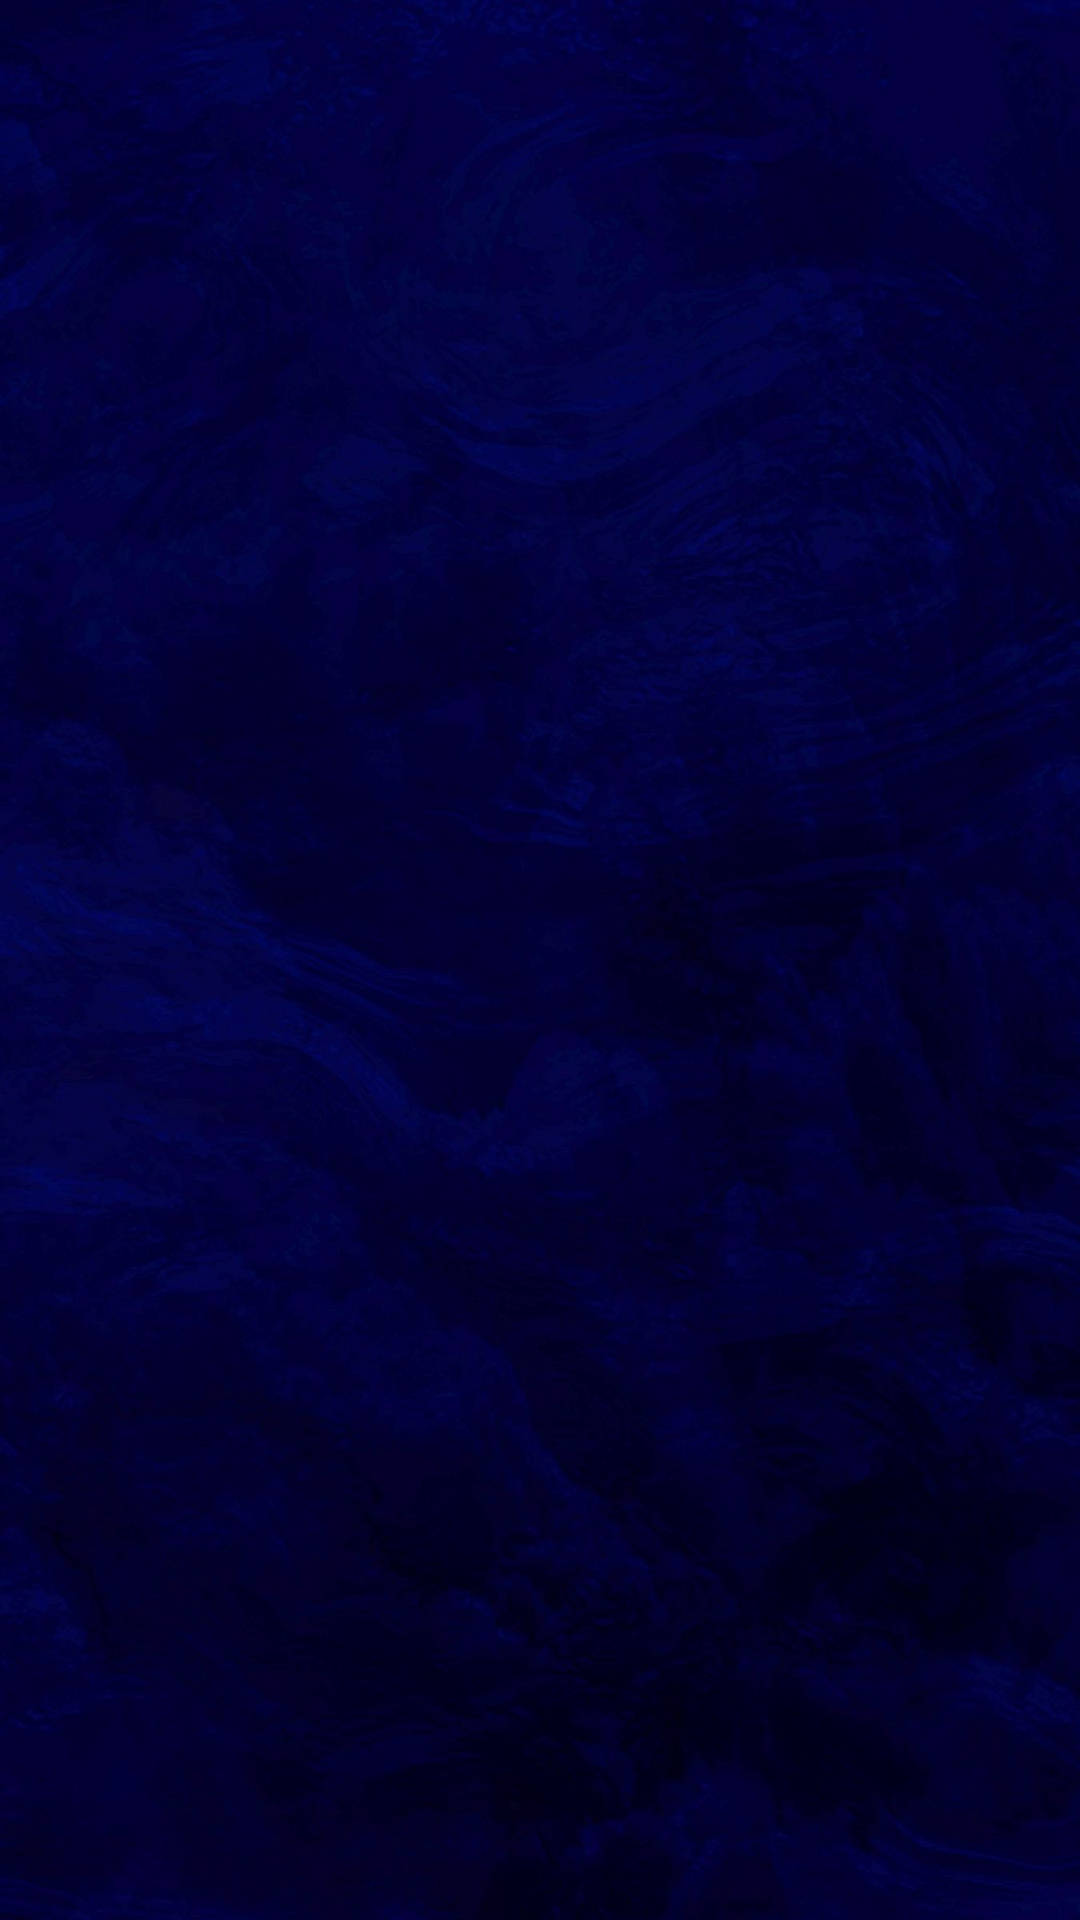 Dark Blue Background Fabric Texture Picture